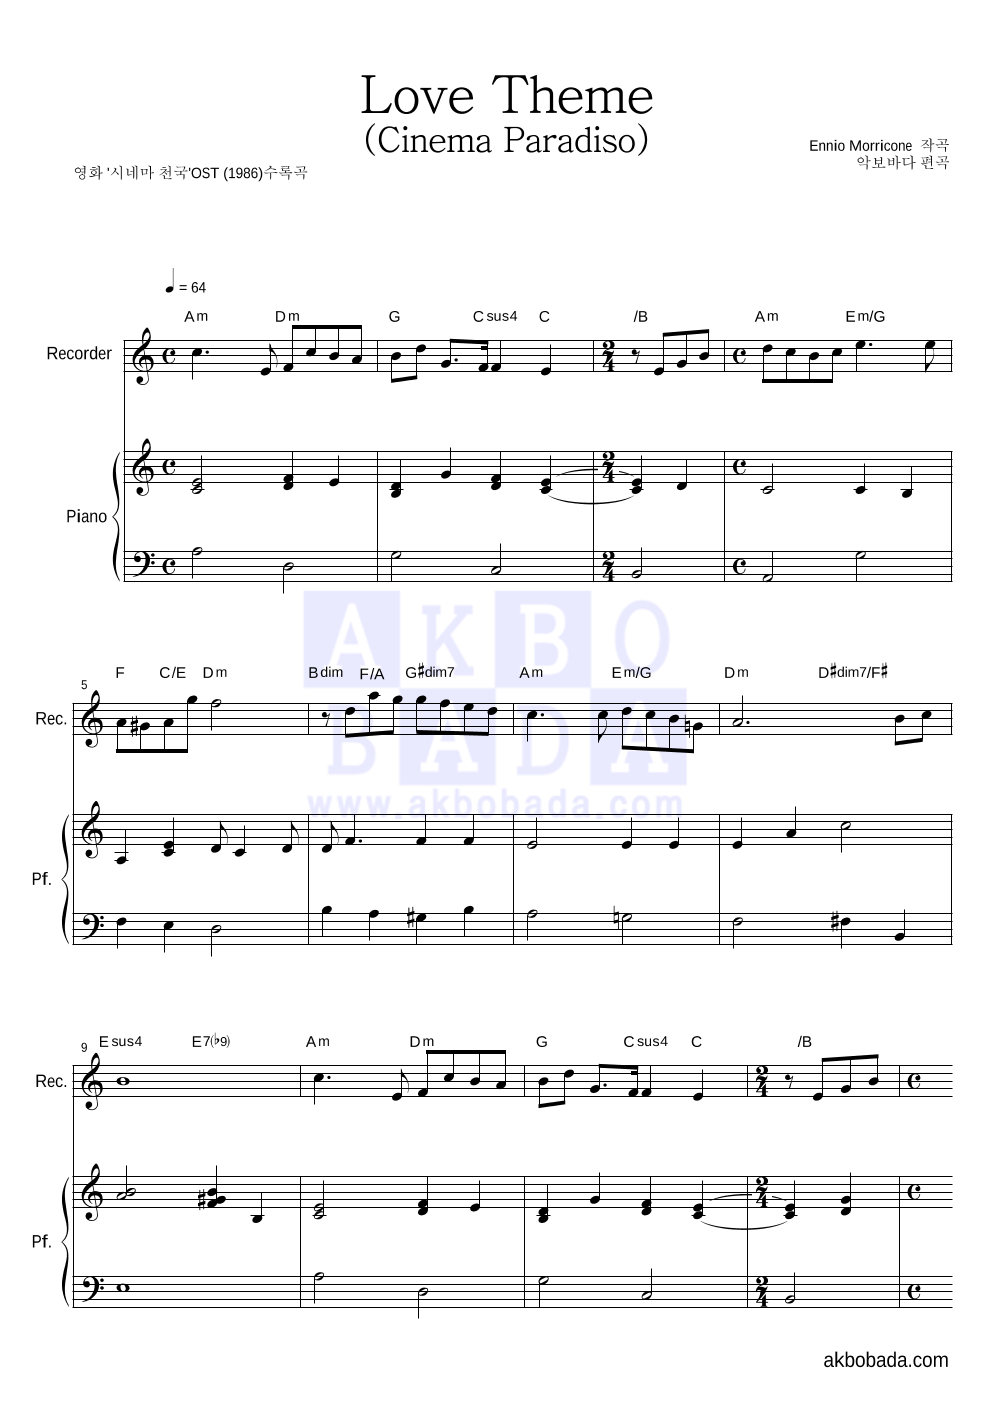 Ennio Morricone - Love Theme (Cinema Paradiso) 리코더&피아노 악보 